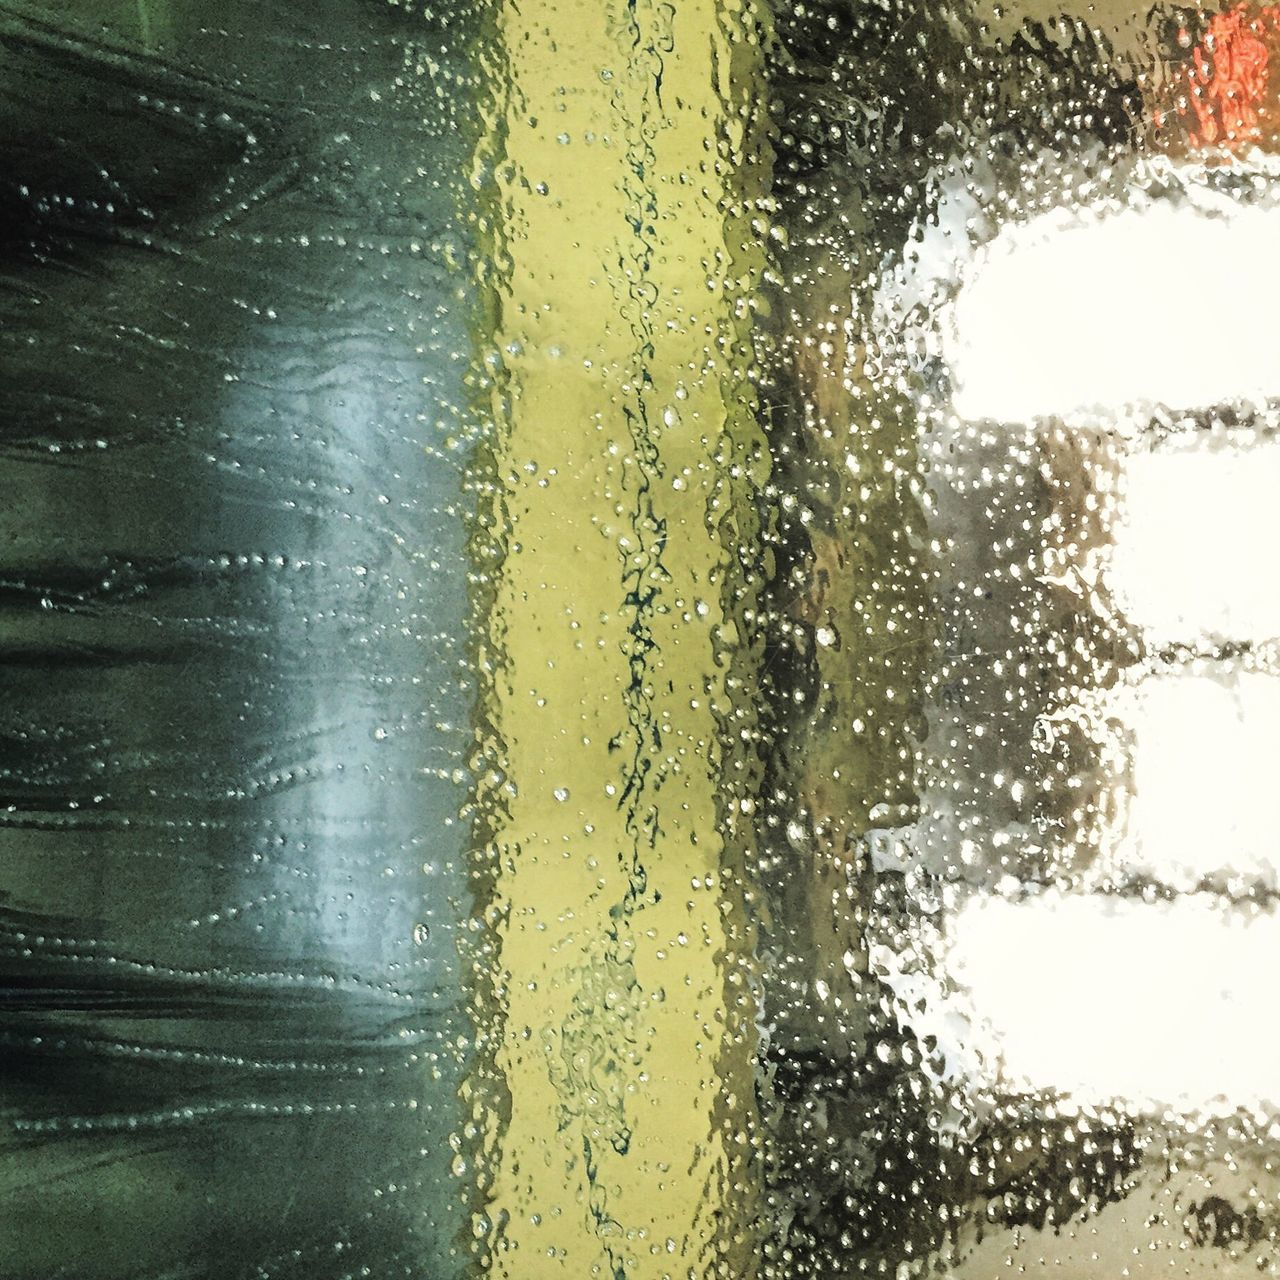 drop, wet, window, rain, water, glass - material, transparent, season, indoors, raindrop, weather, close-up, full frame, car, transportation, vehicle interior, backgrounds, land vehicle, windshield, monsoon